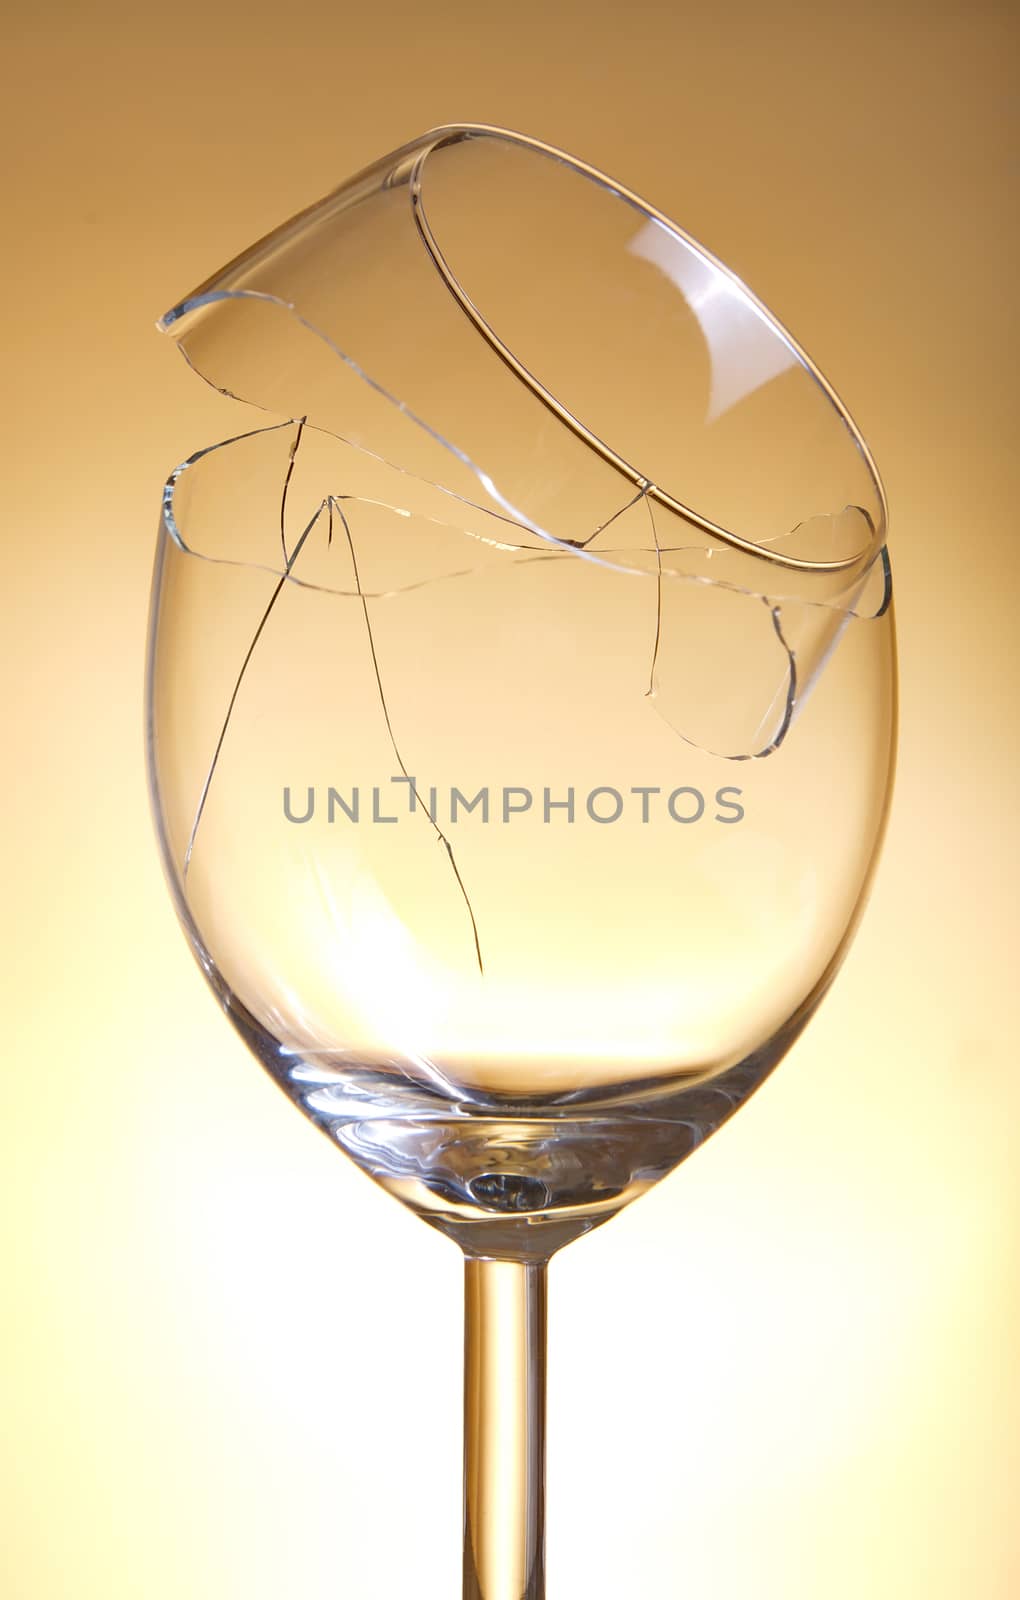 Broken vine glass on orange background by anderm